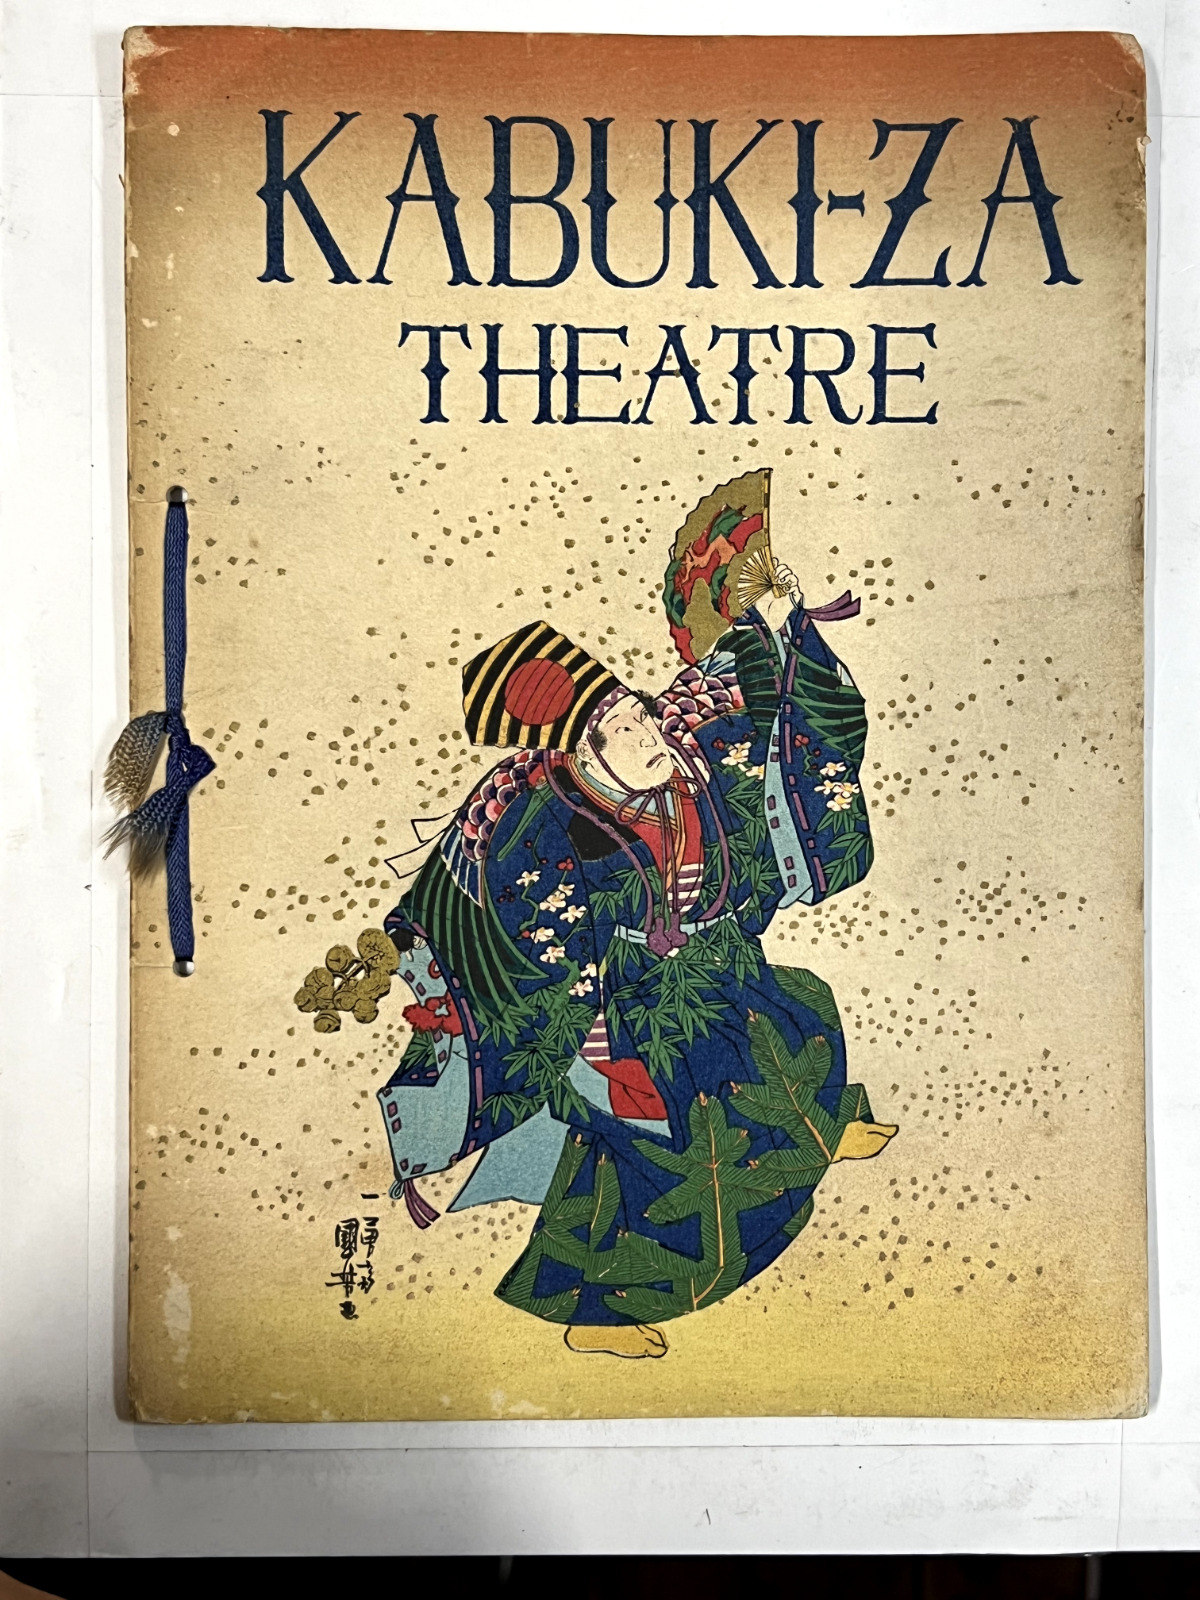 kabuki-za theatre magazine 1951 the kabuki stage of japan | Combined Shipping B&